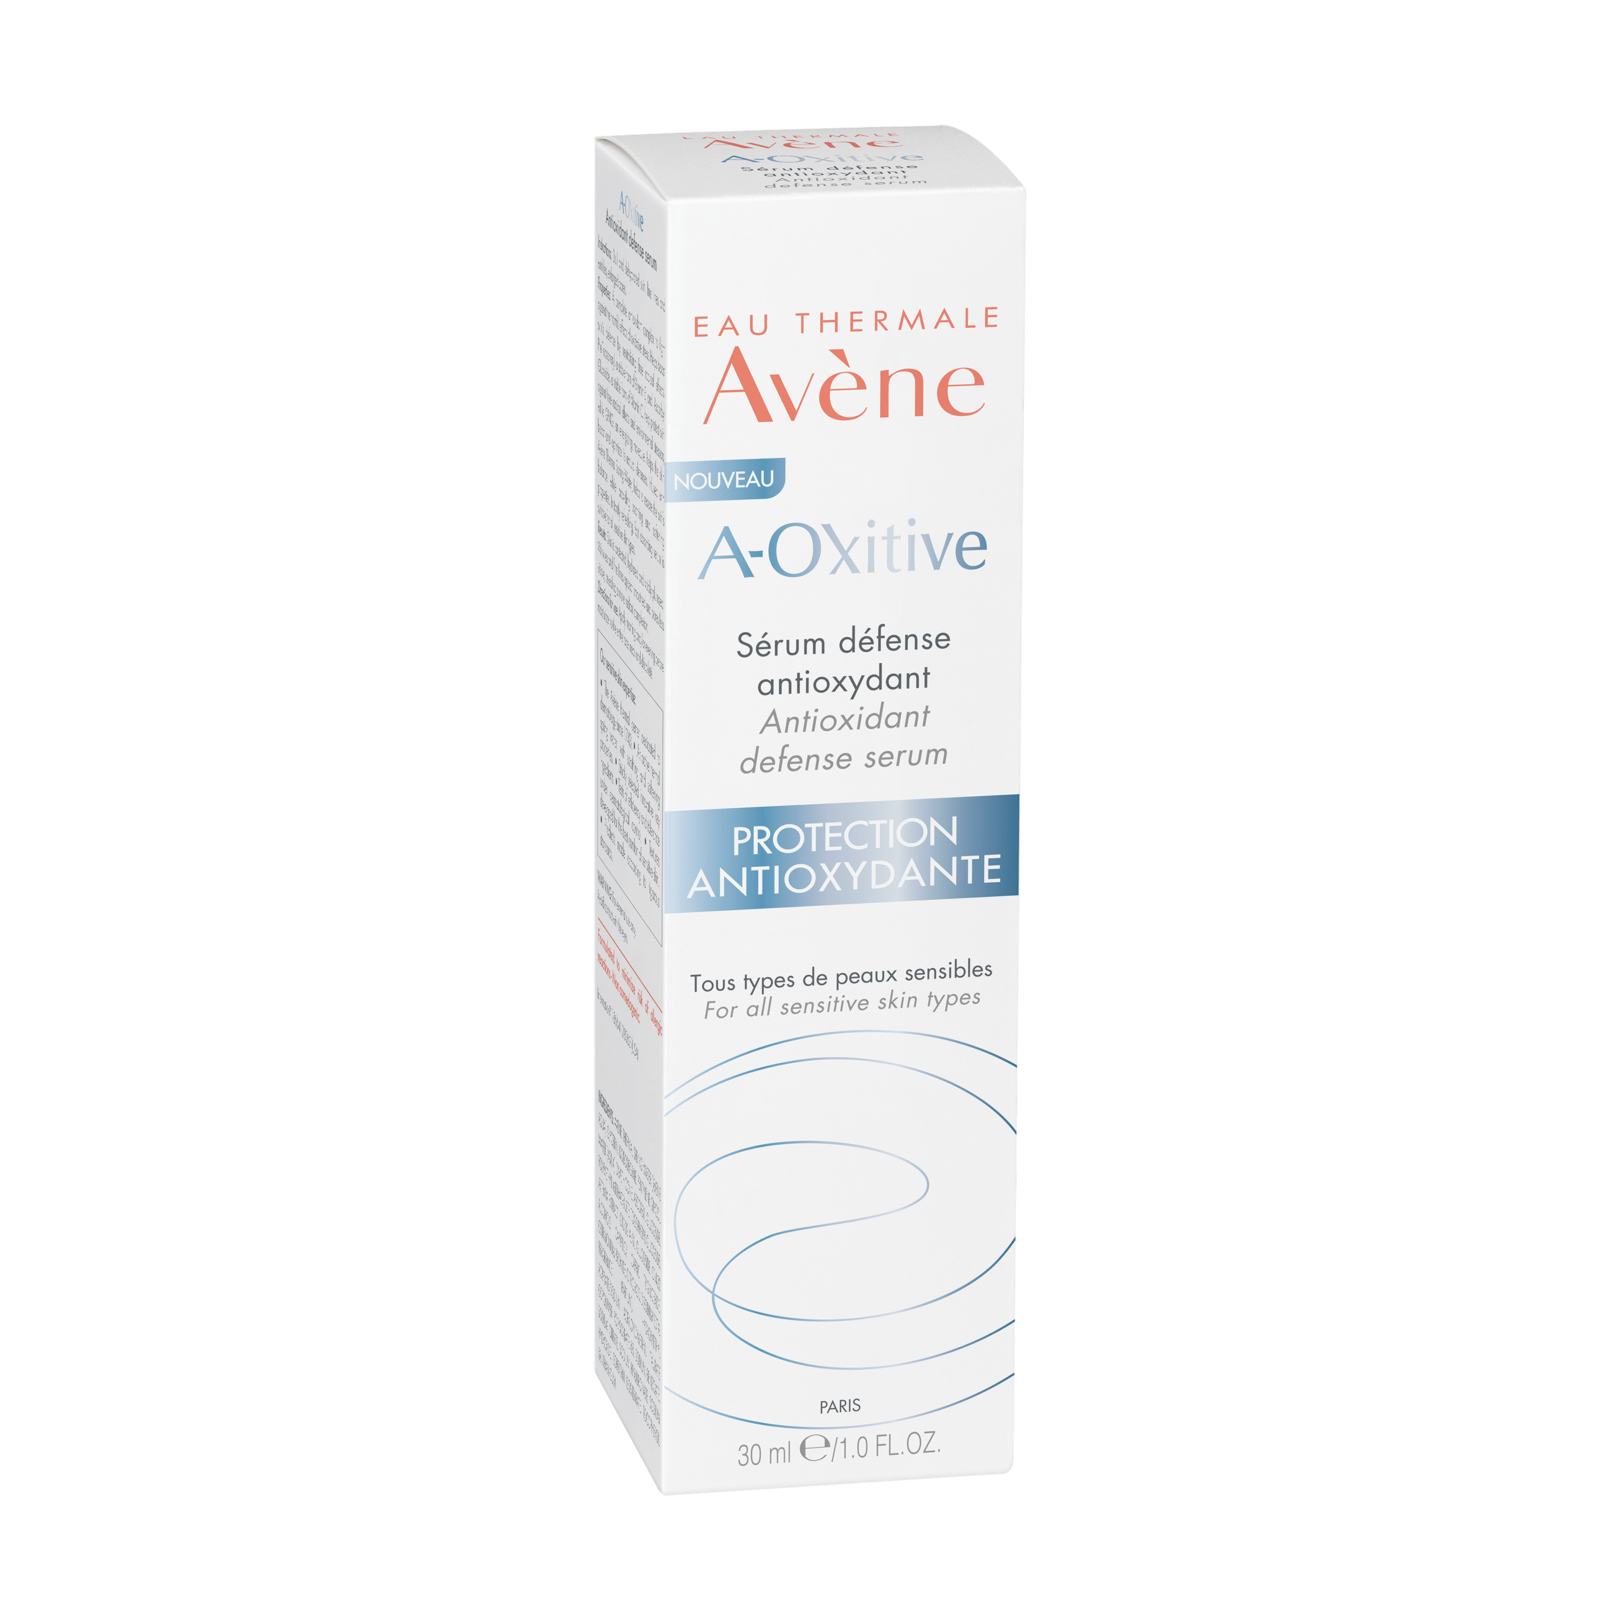 A-OXitive SERUM Antioxidant defense serum